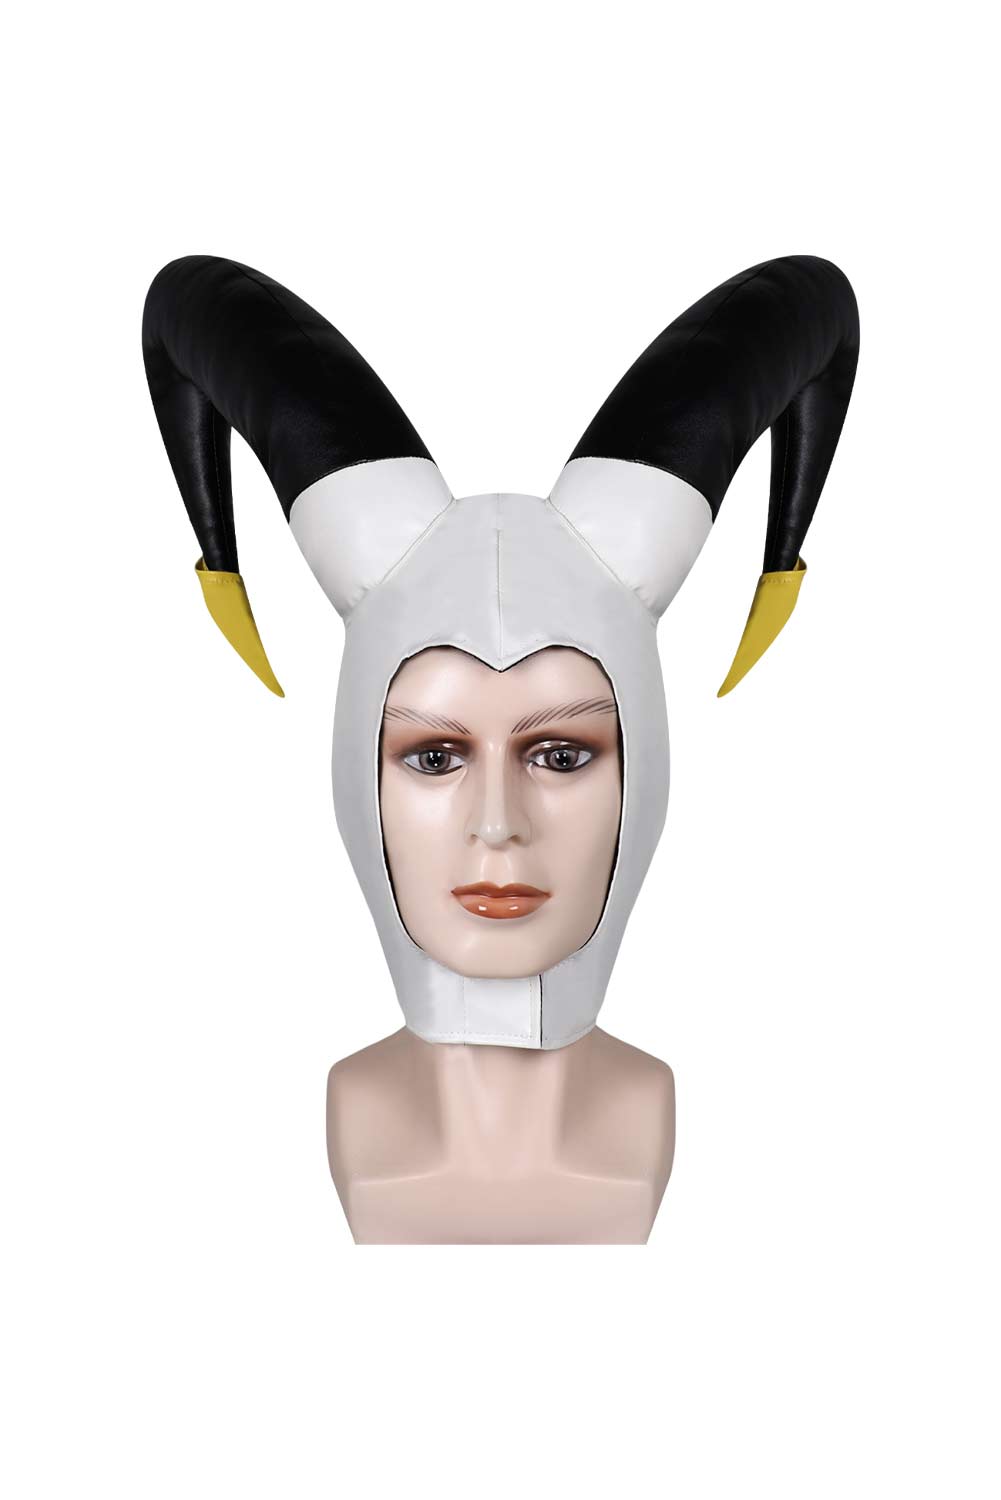 TV Hazbin Hotel Adam The Exorcist Cosplay Black And White Headband Hat Halloween Costume Accessories